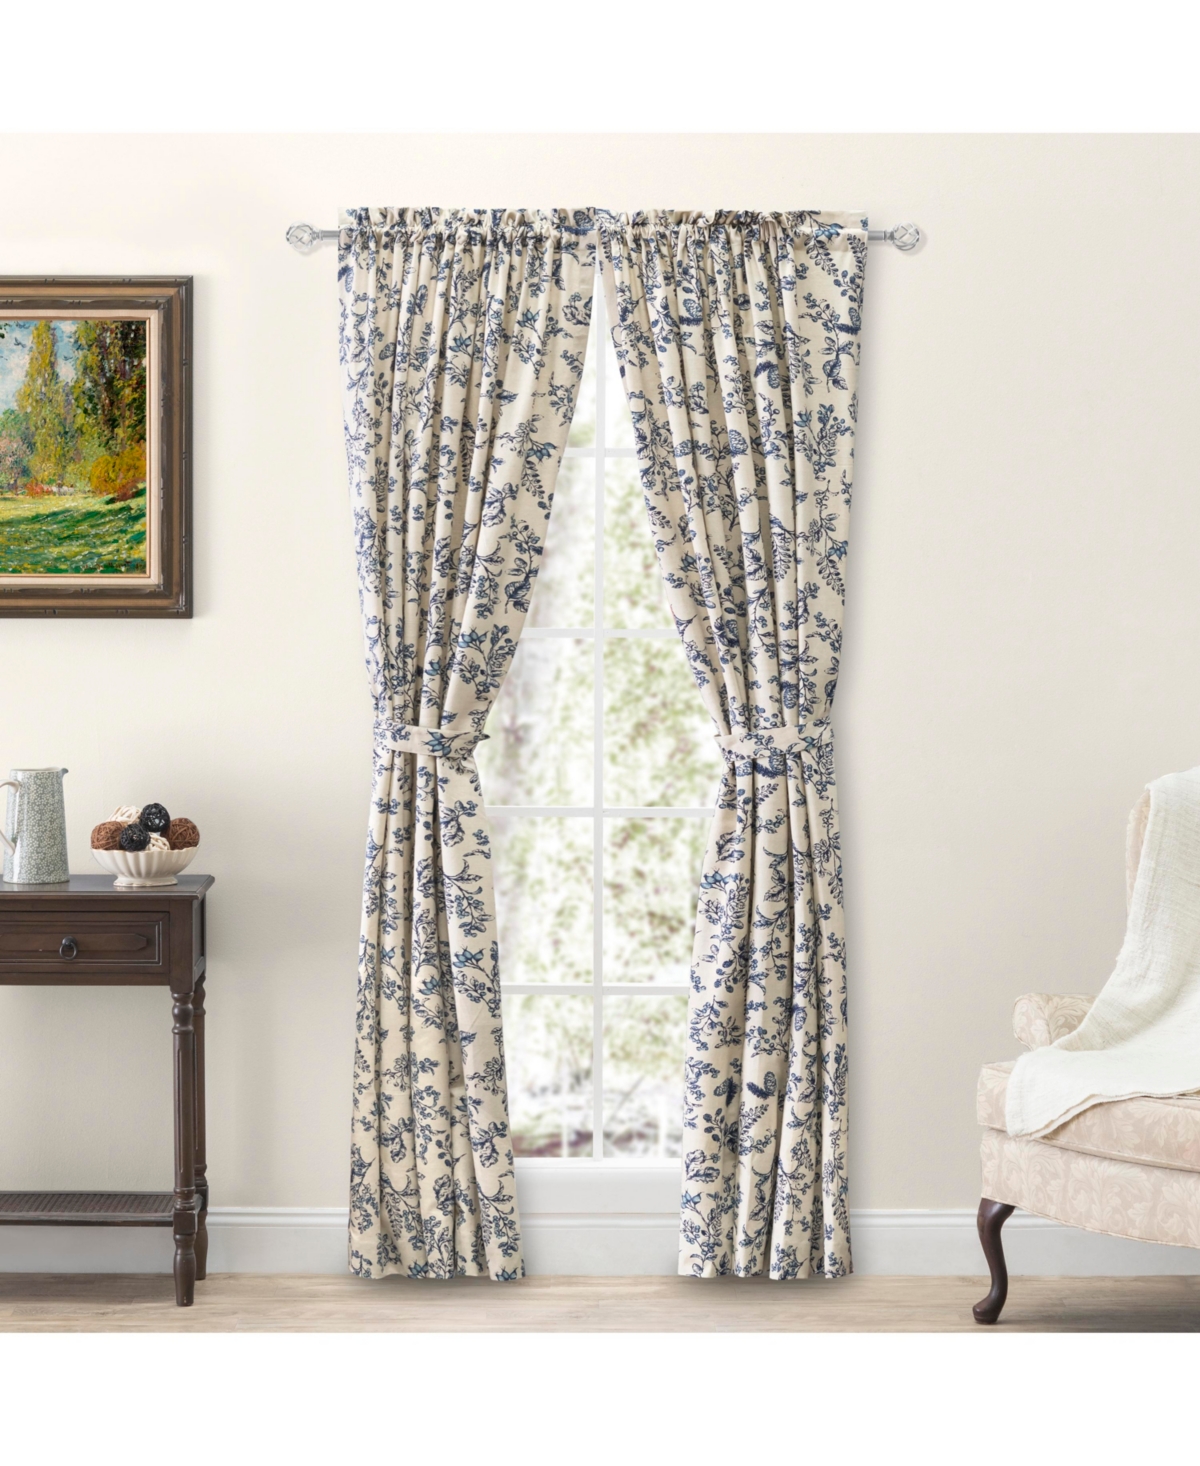 Waverly Gardens Tailored Curtain Panel Curtain Pair with tiebacks 84"W x 45"L - Indigo  white